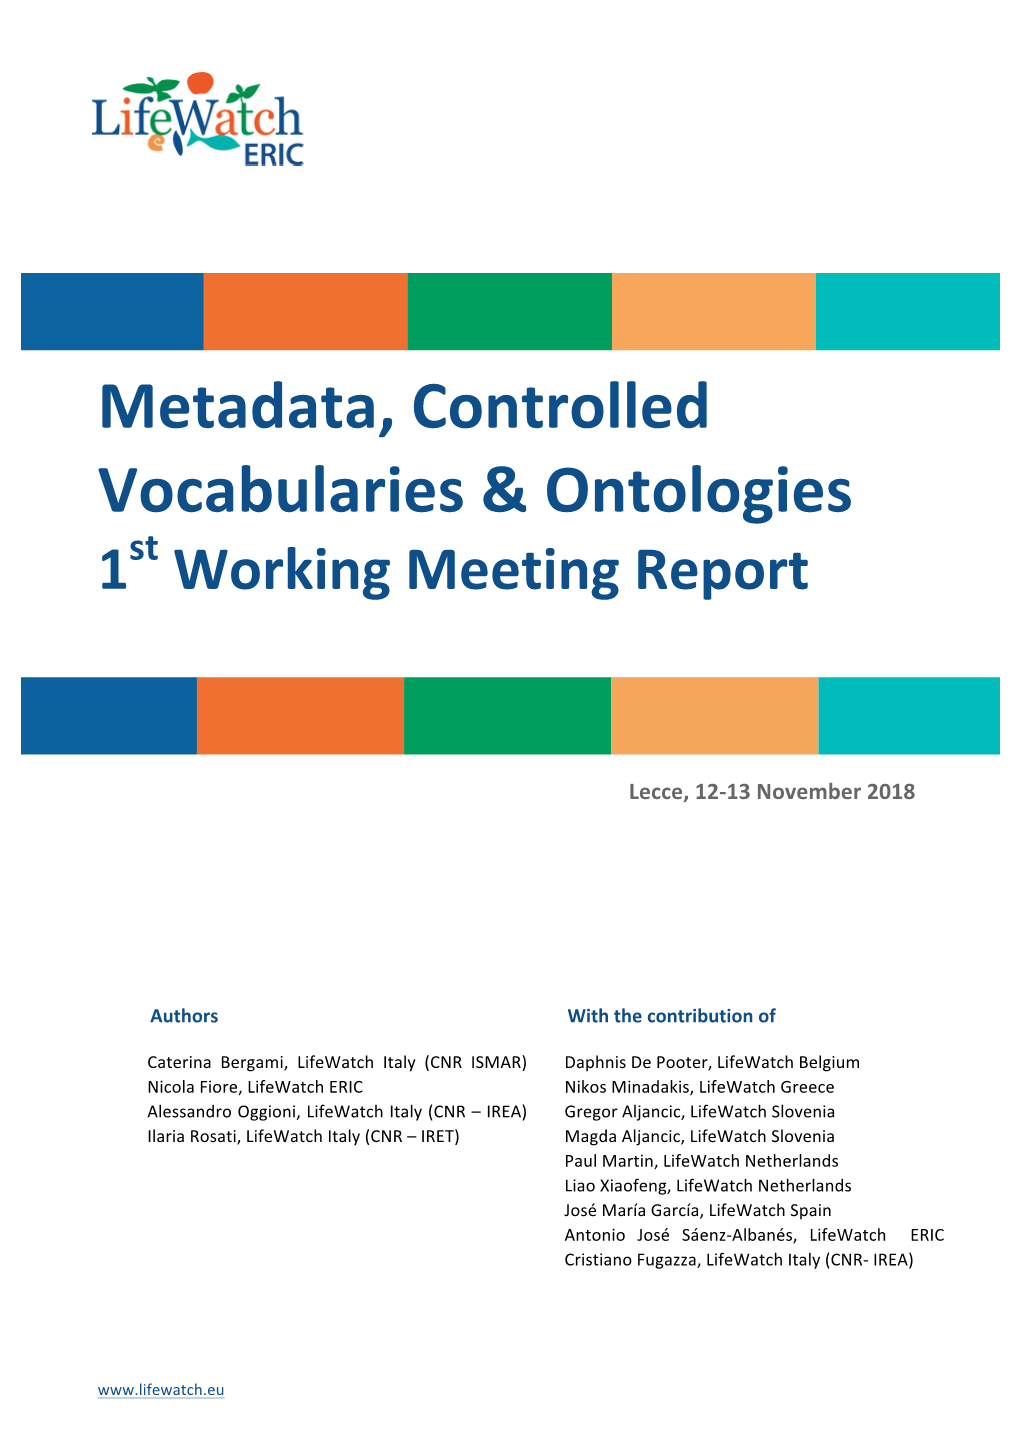 Metadata, Controlled Vocabularies & Ontologies